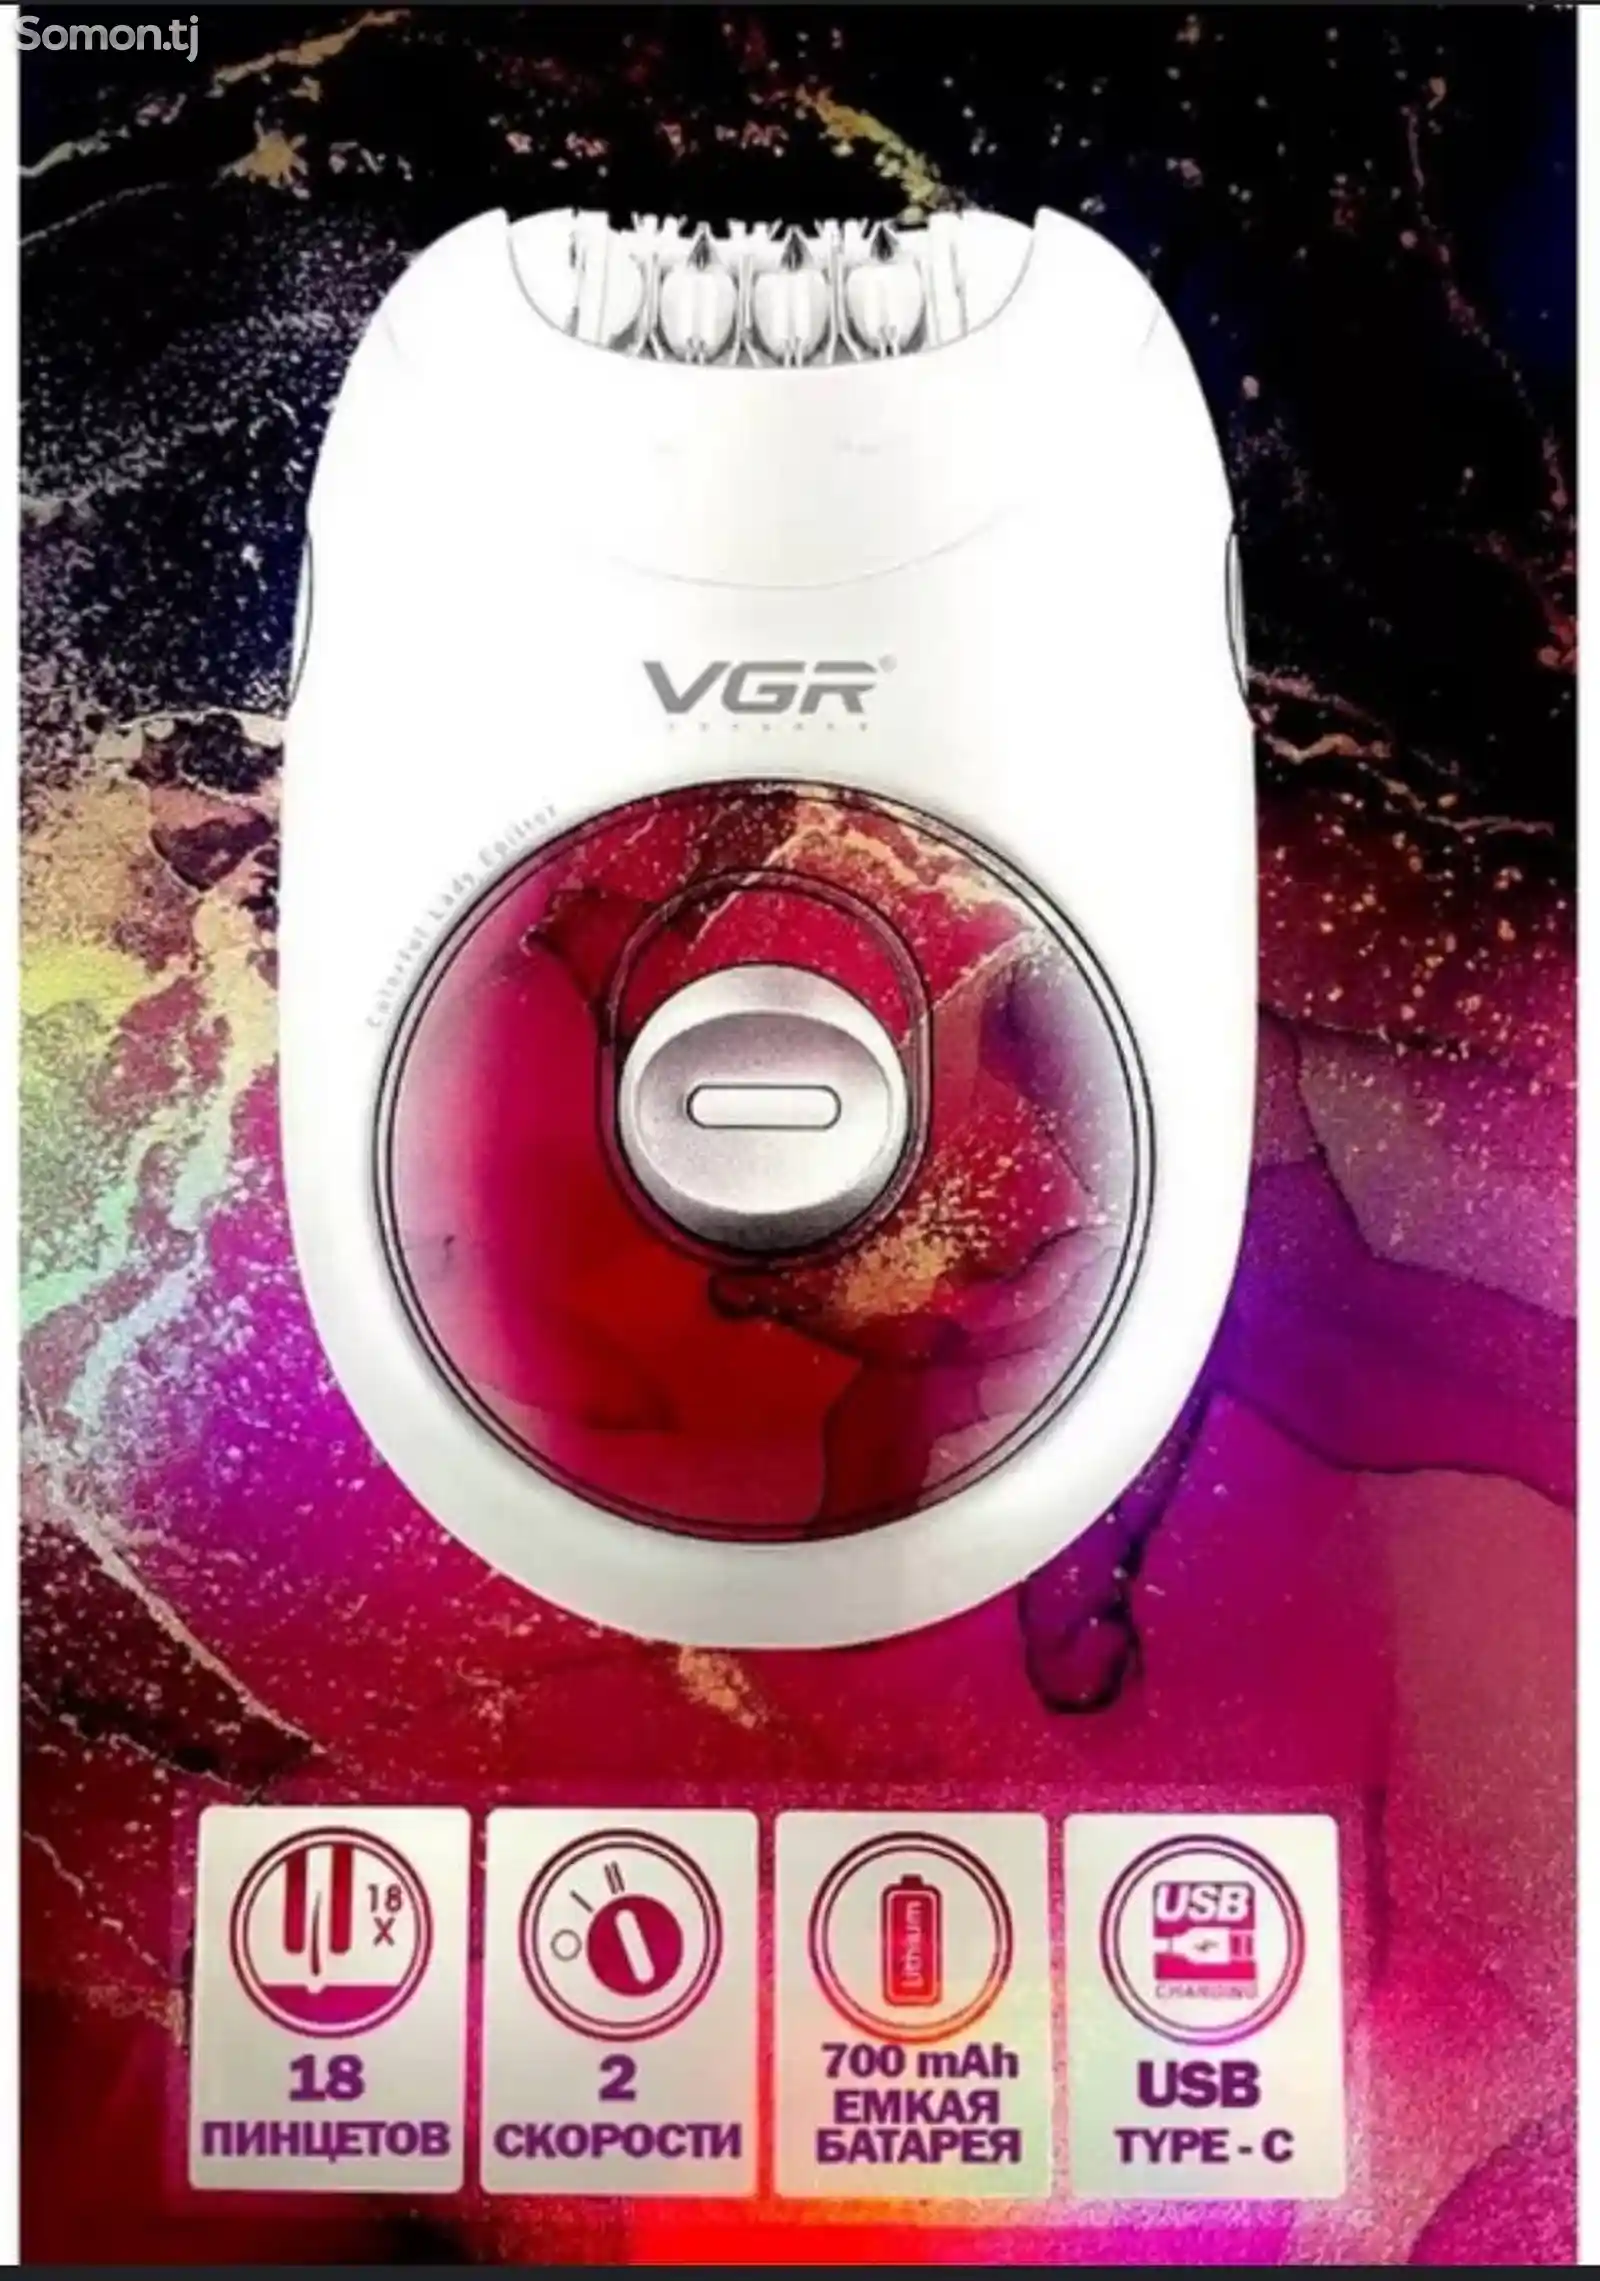 Эпилятор женский VGR V-706 белый аккумуляторный 2 скорости депилятор для тела-4